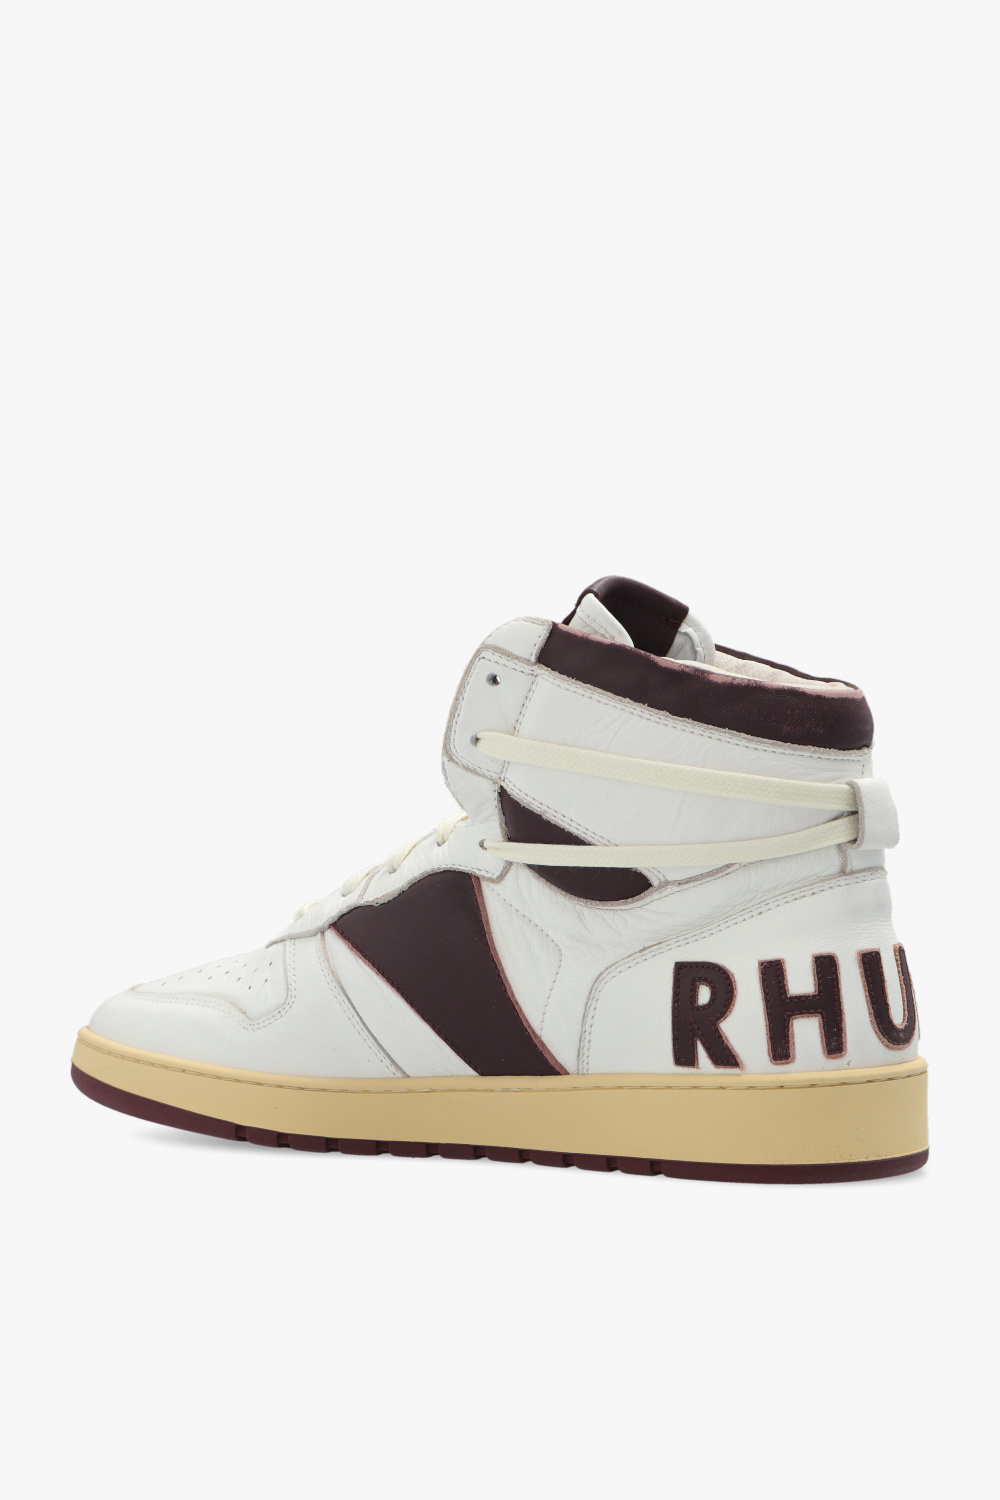 Rhude ‘Rhecess High’ high-top sneakers